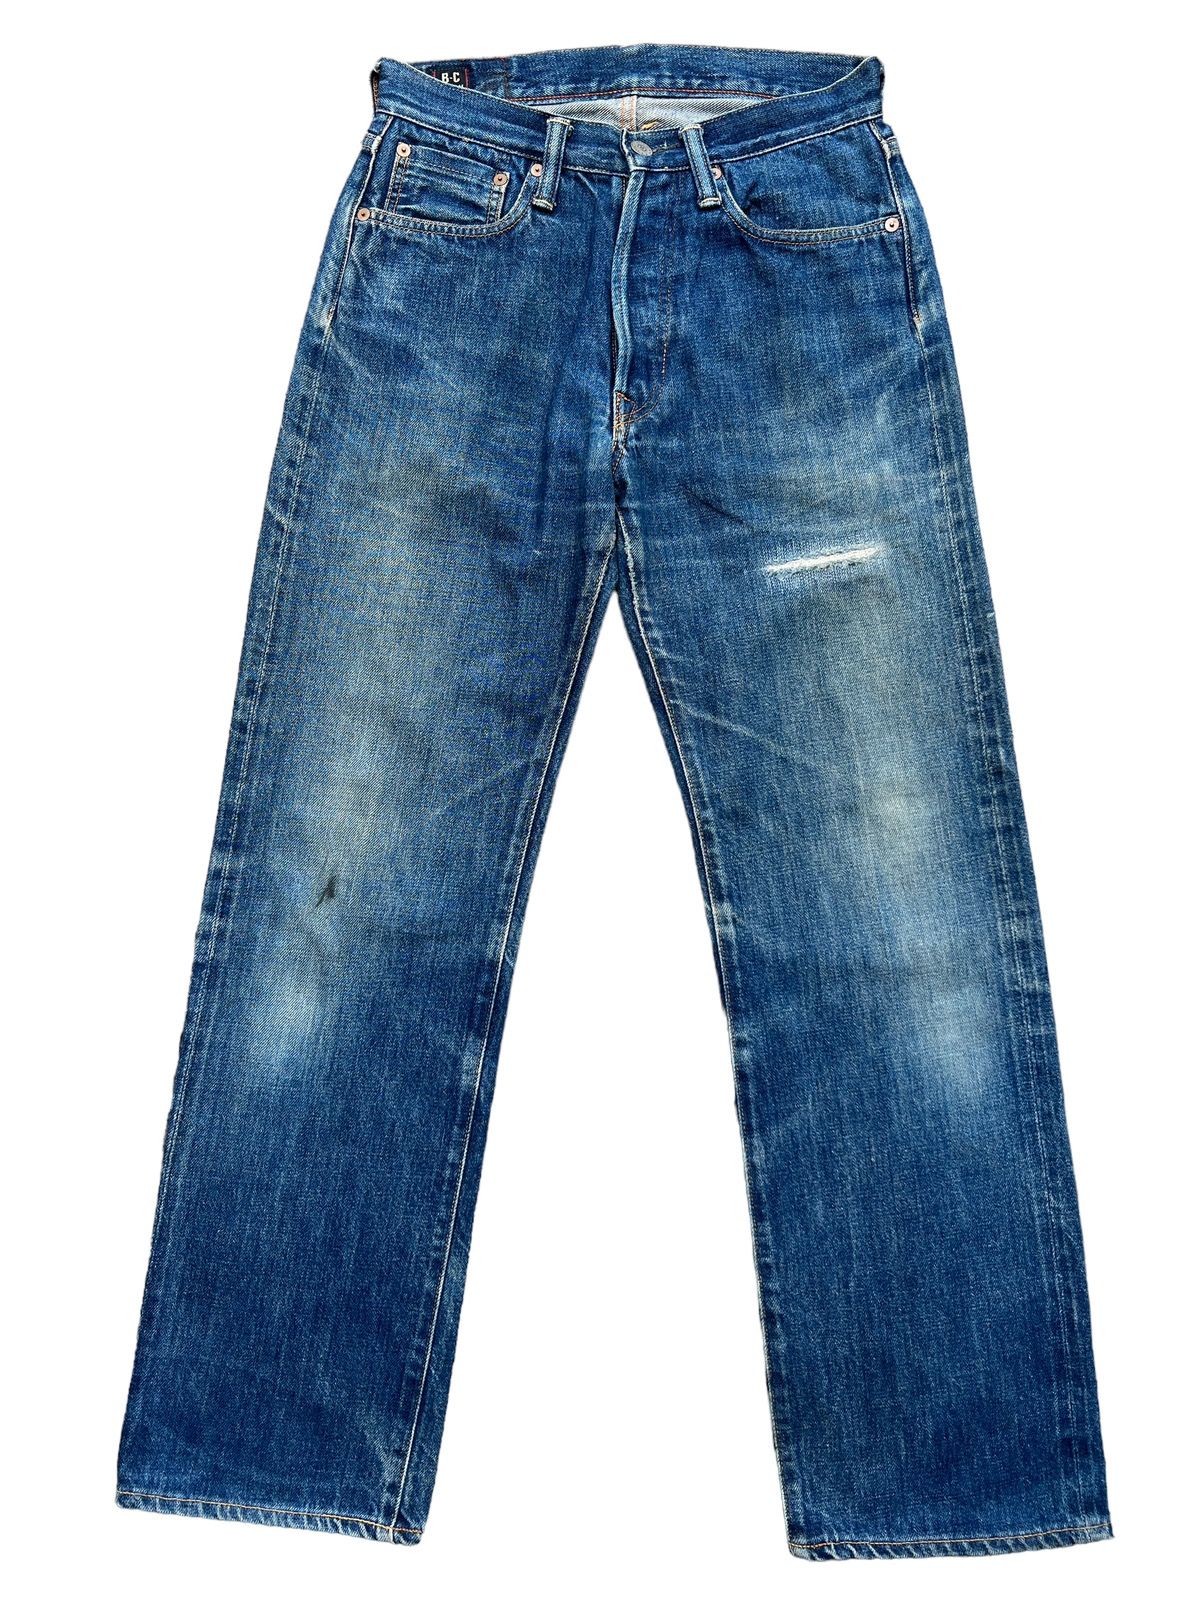 Vintage 45Rpm Selvedge Faded Distressed Denim Jeans 29x29 - 2